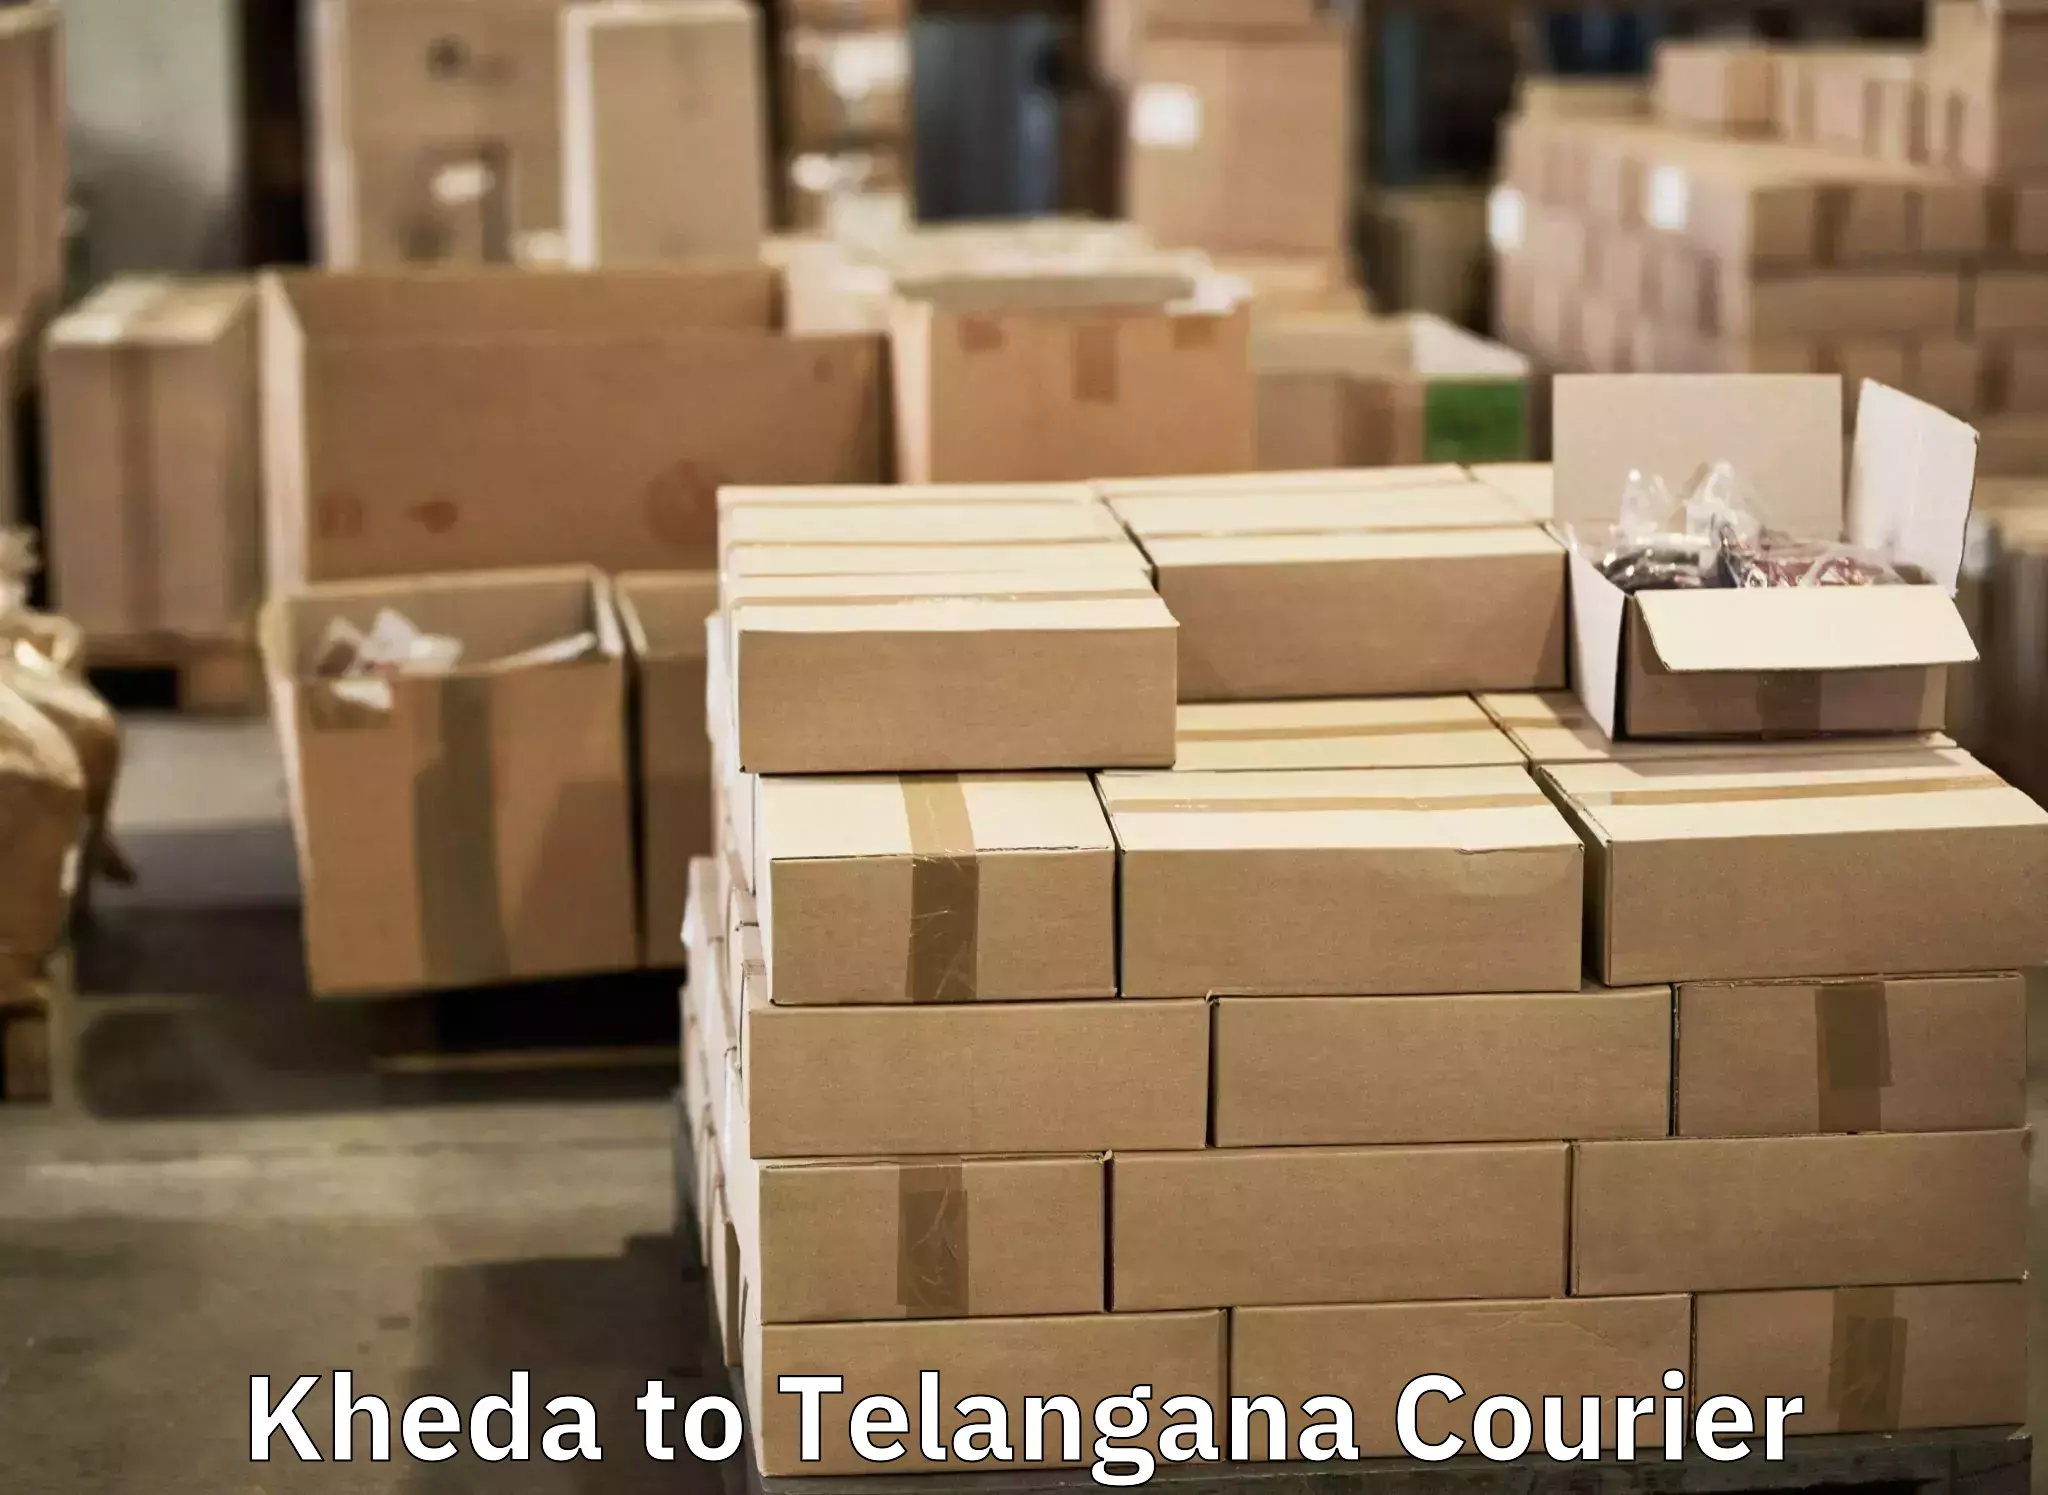 Same day luggage service Kheda to Telangana